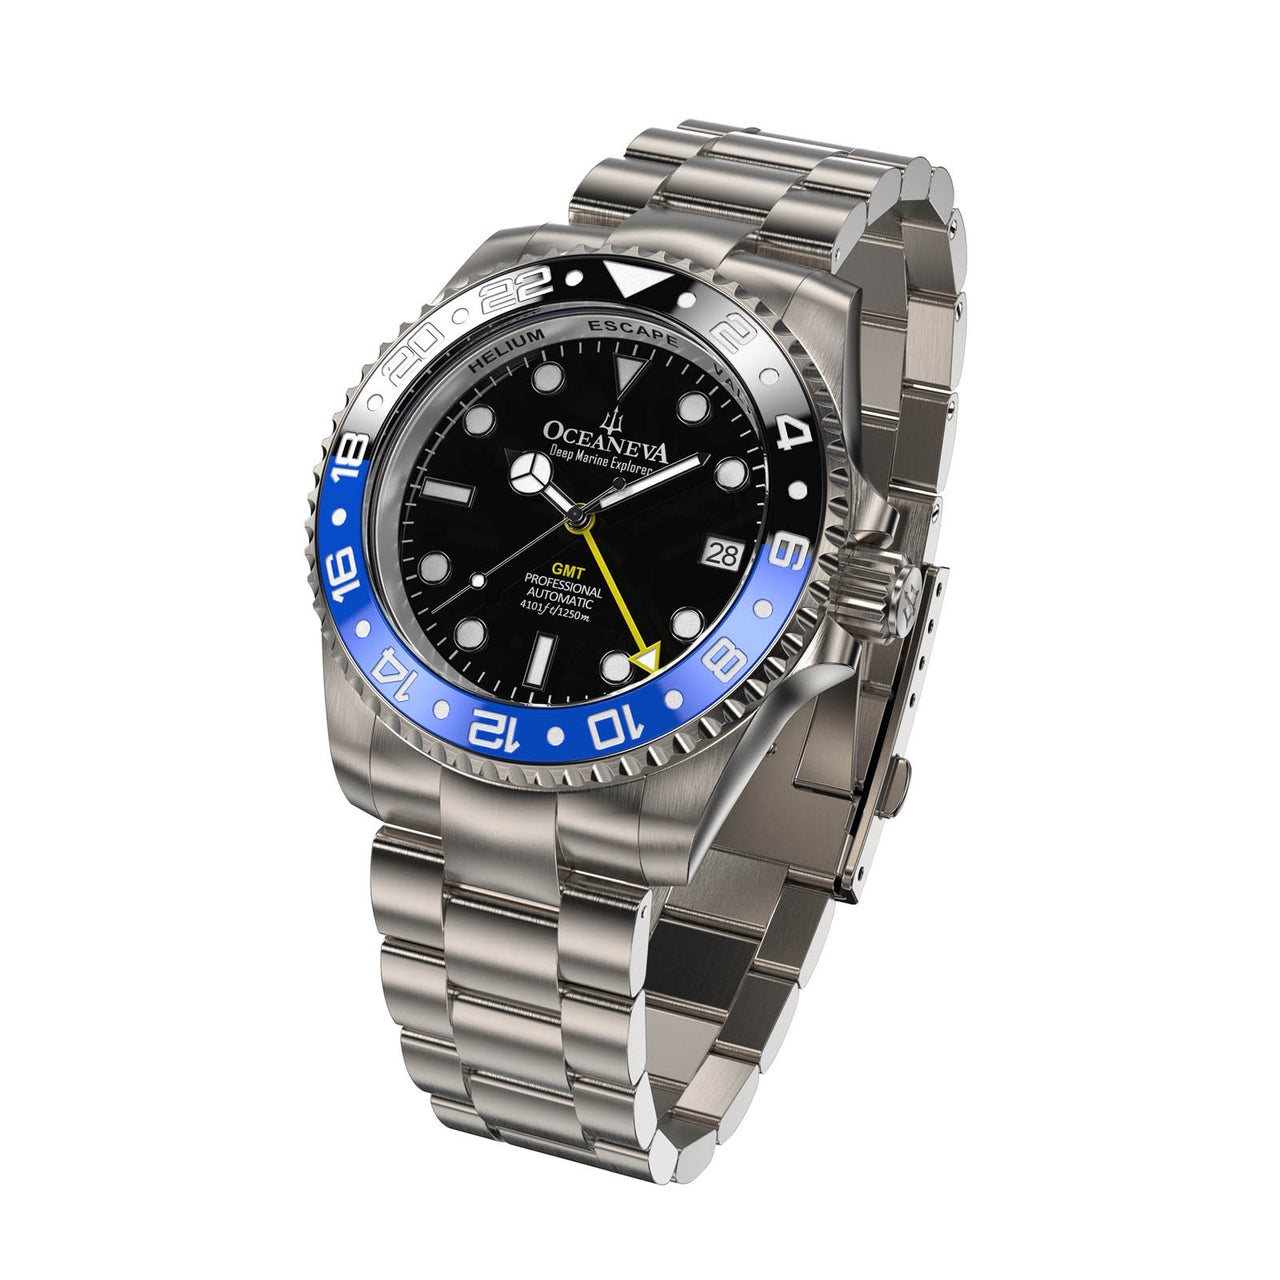 High-end 24 Jewels mechanism inside Oceaneva Men's GMT Watch